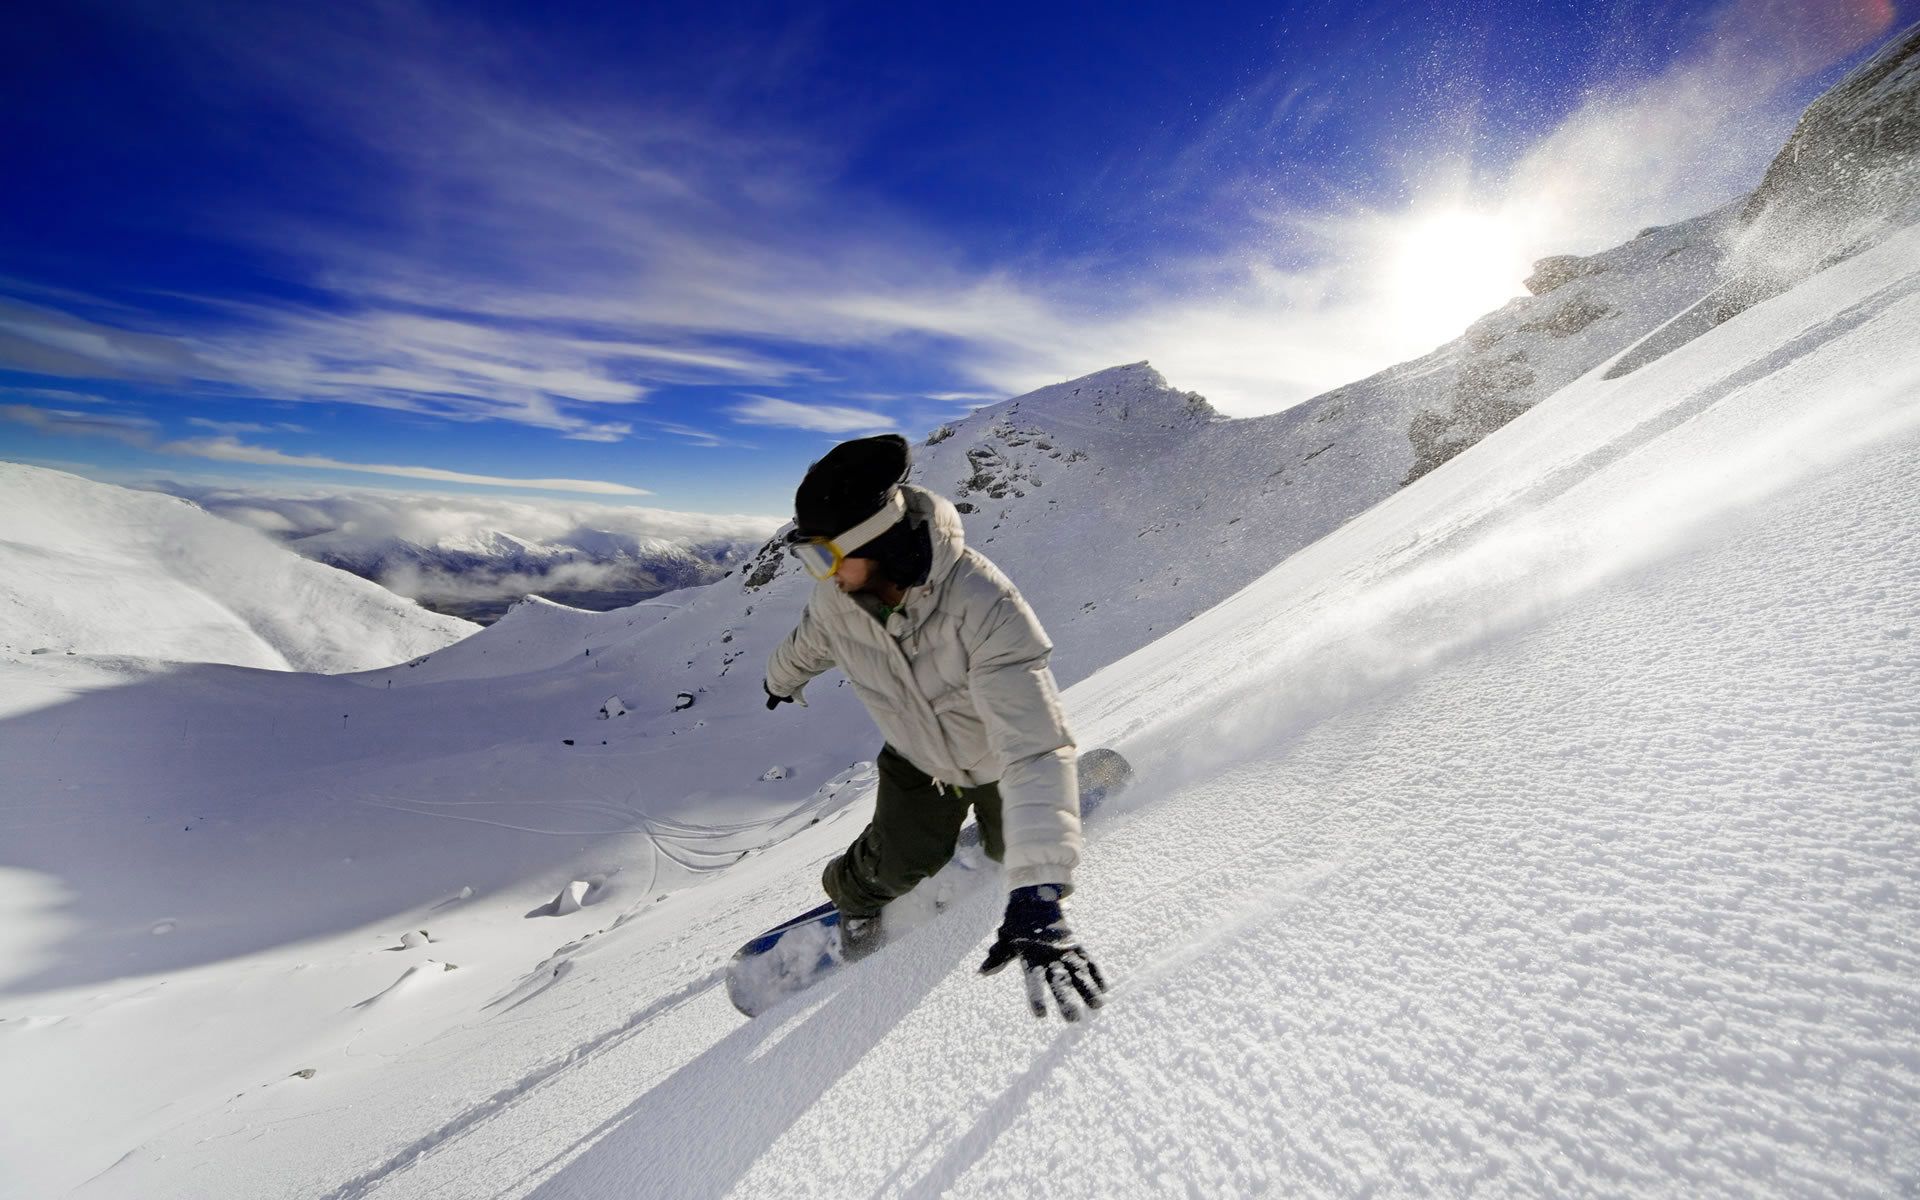 hd snowboarding mountain wallpaper mobile free download